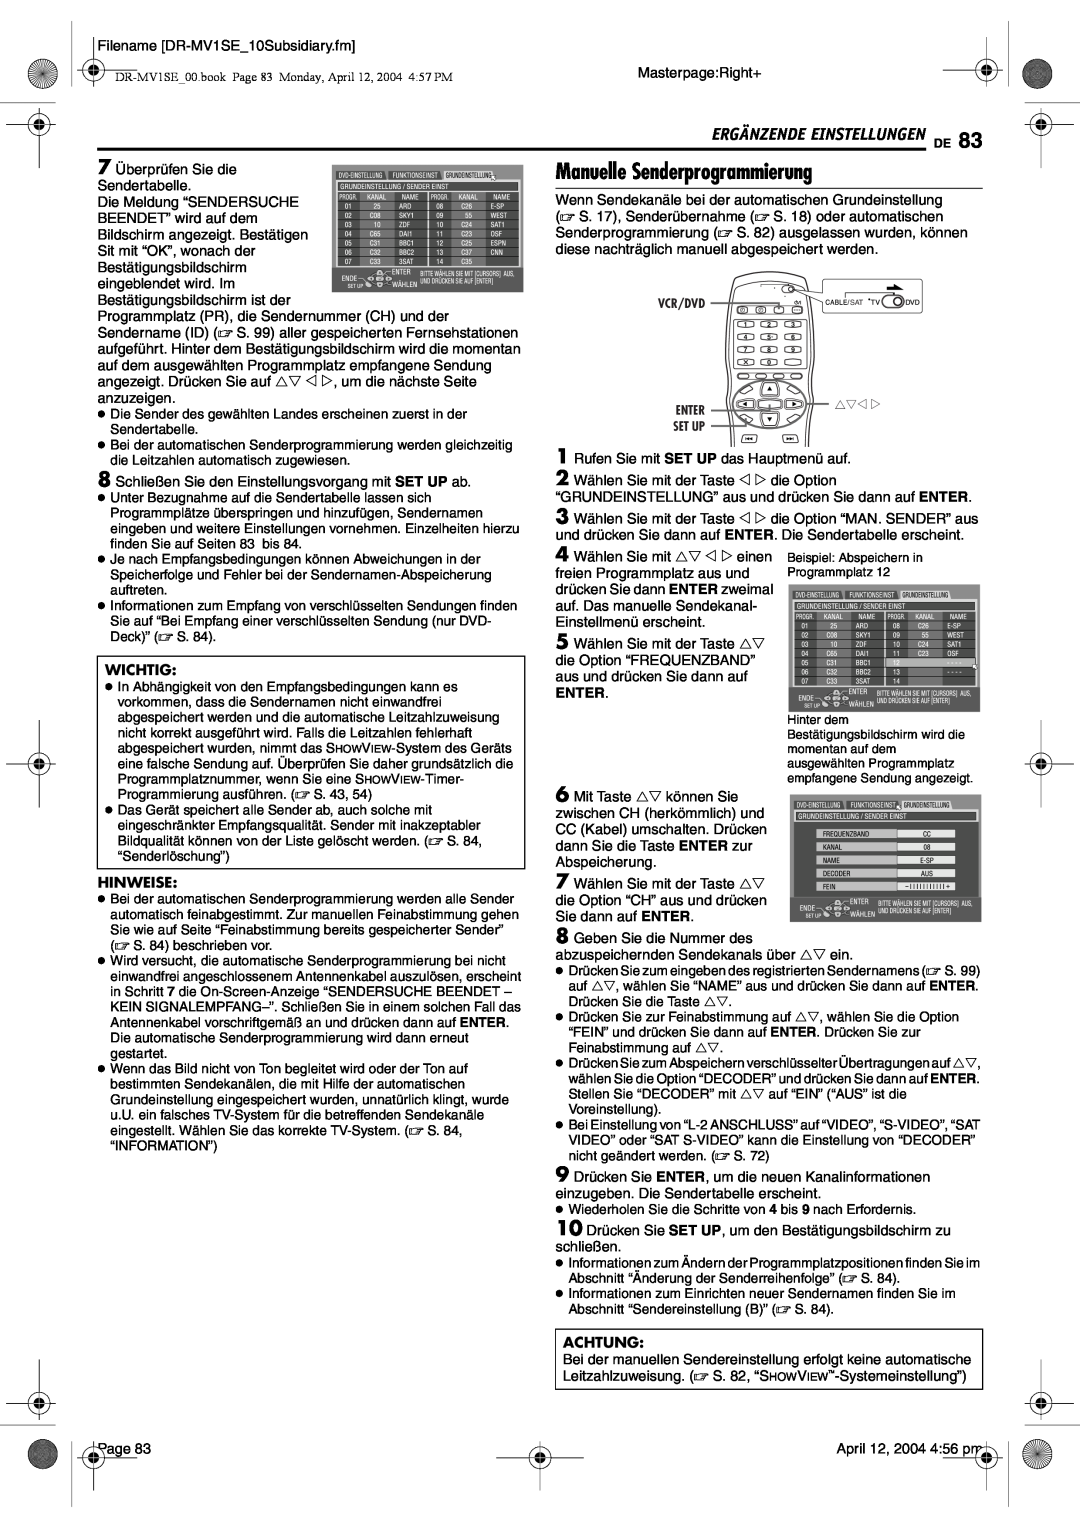 JVC DR-MV1S manual Manuelle Senderprogrammierung, Wichtig, Enter, Hinweise, Achtung 